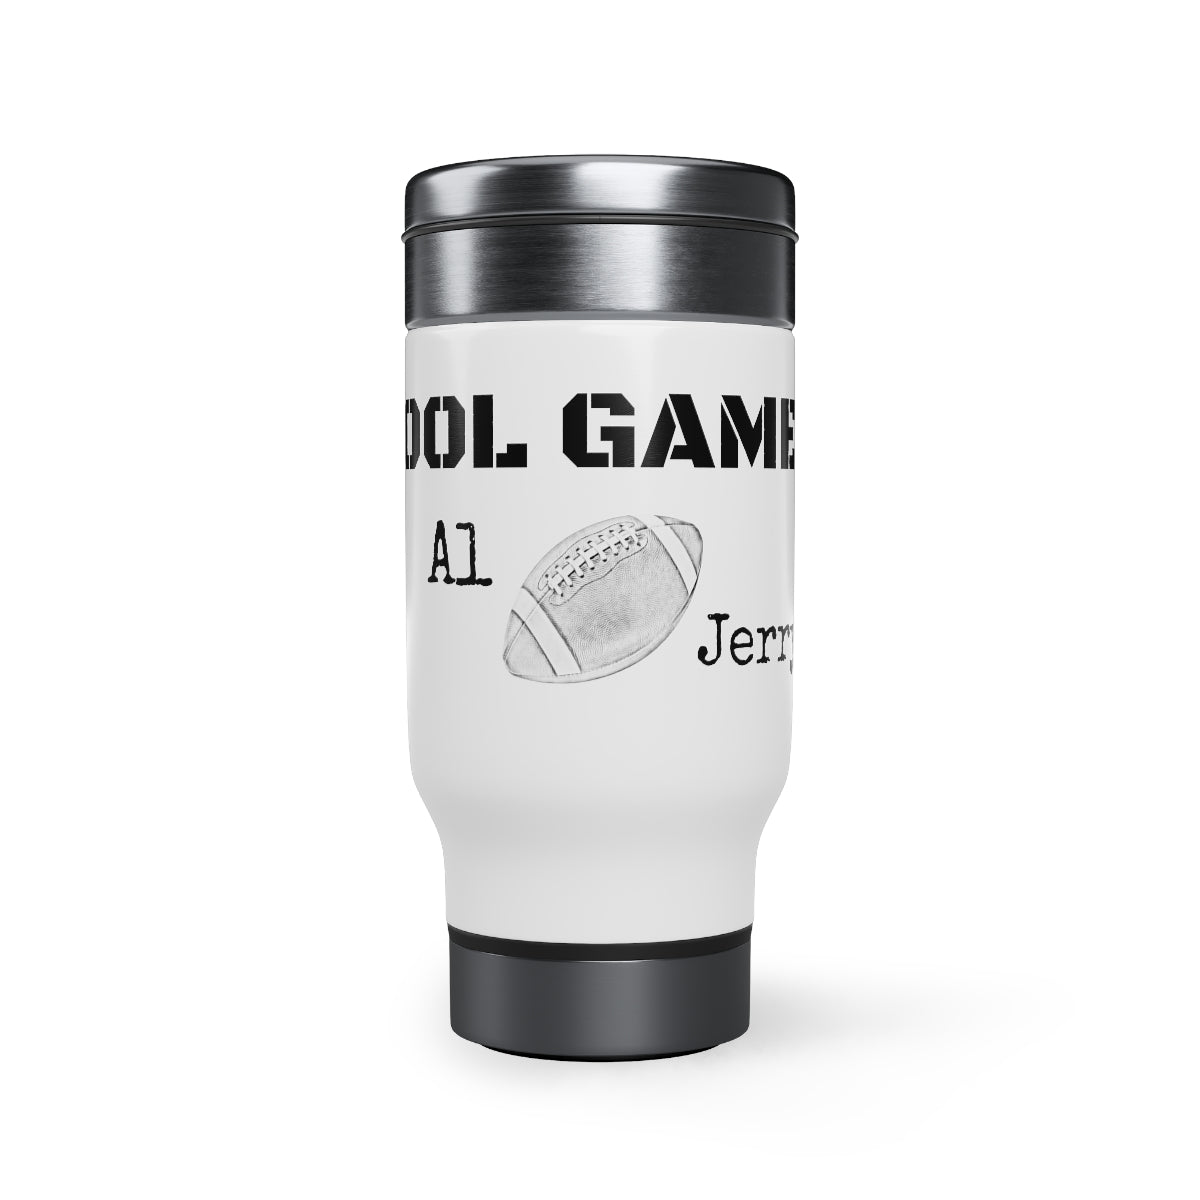 Al & Jerry "Cool Games" Travel Mug